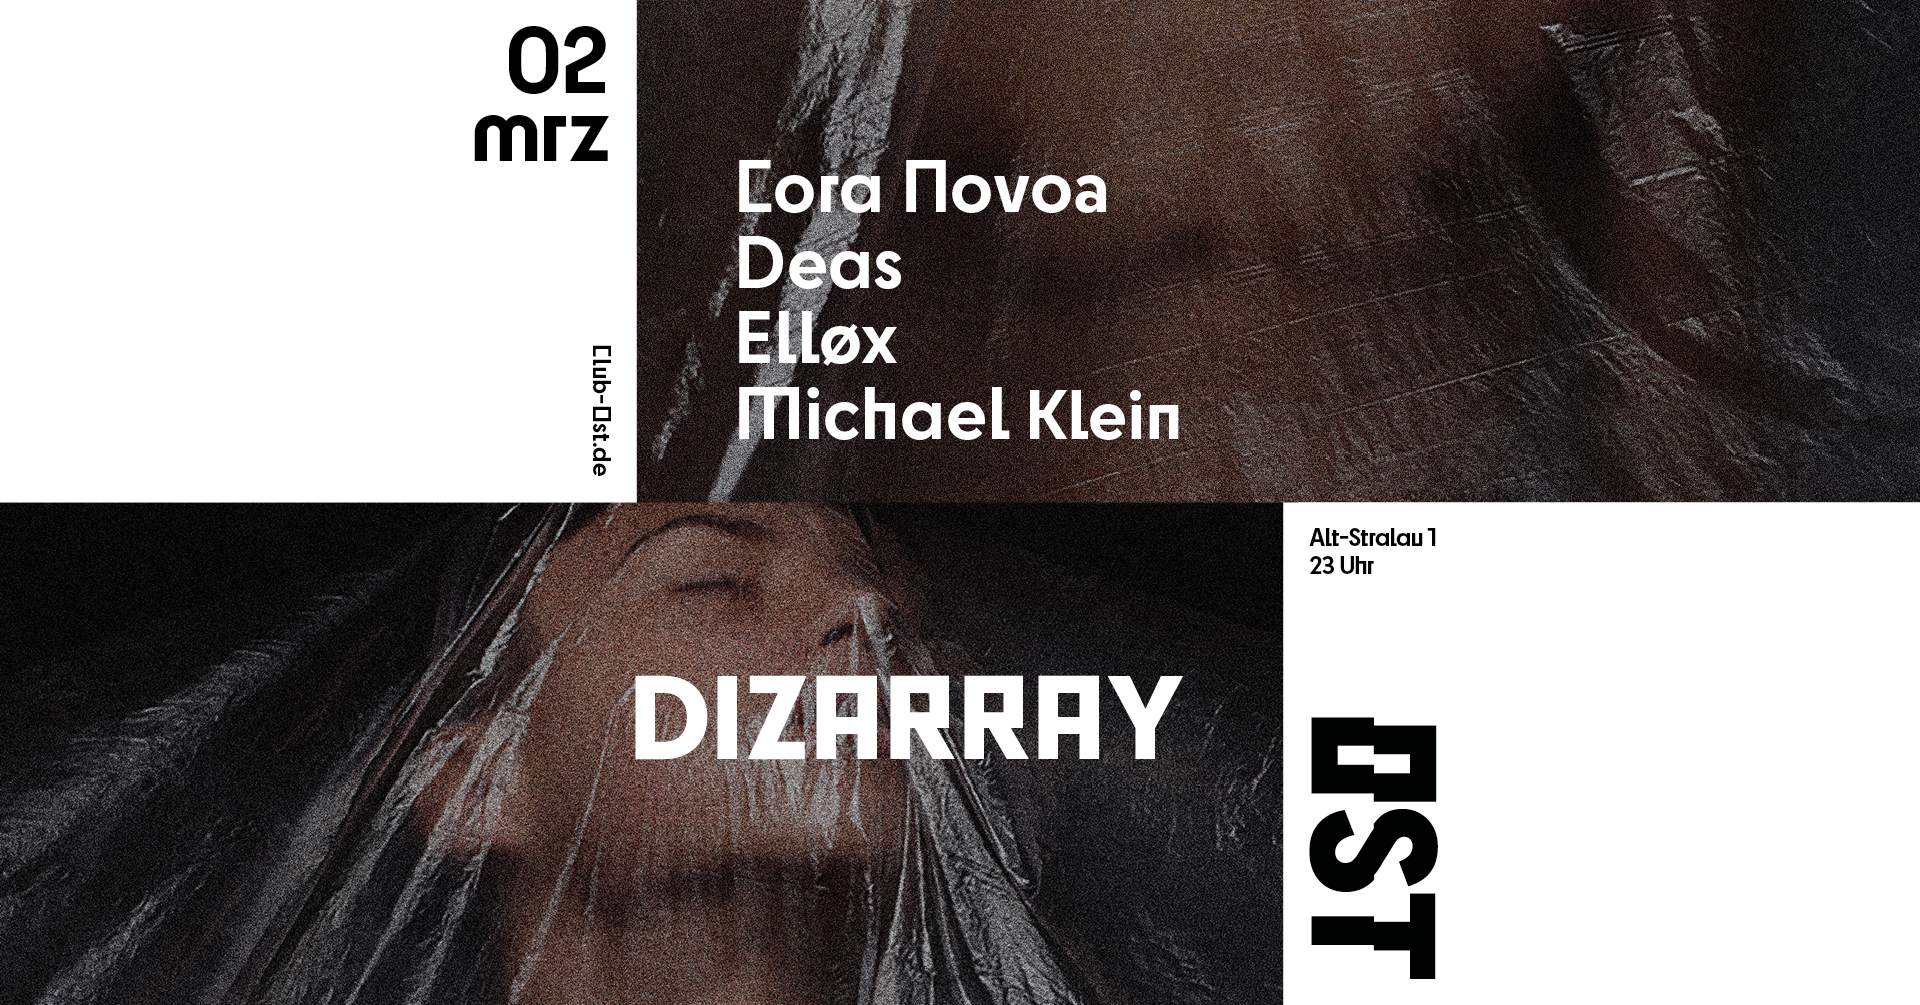 OST DIZARRAY w./ Cora Novoa, Deas, Michael Klein, Elløx - フライヤー表